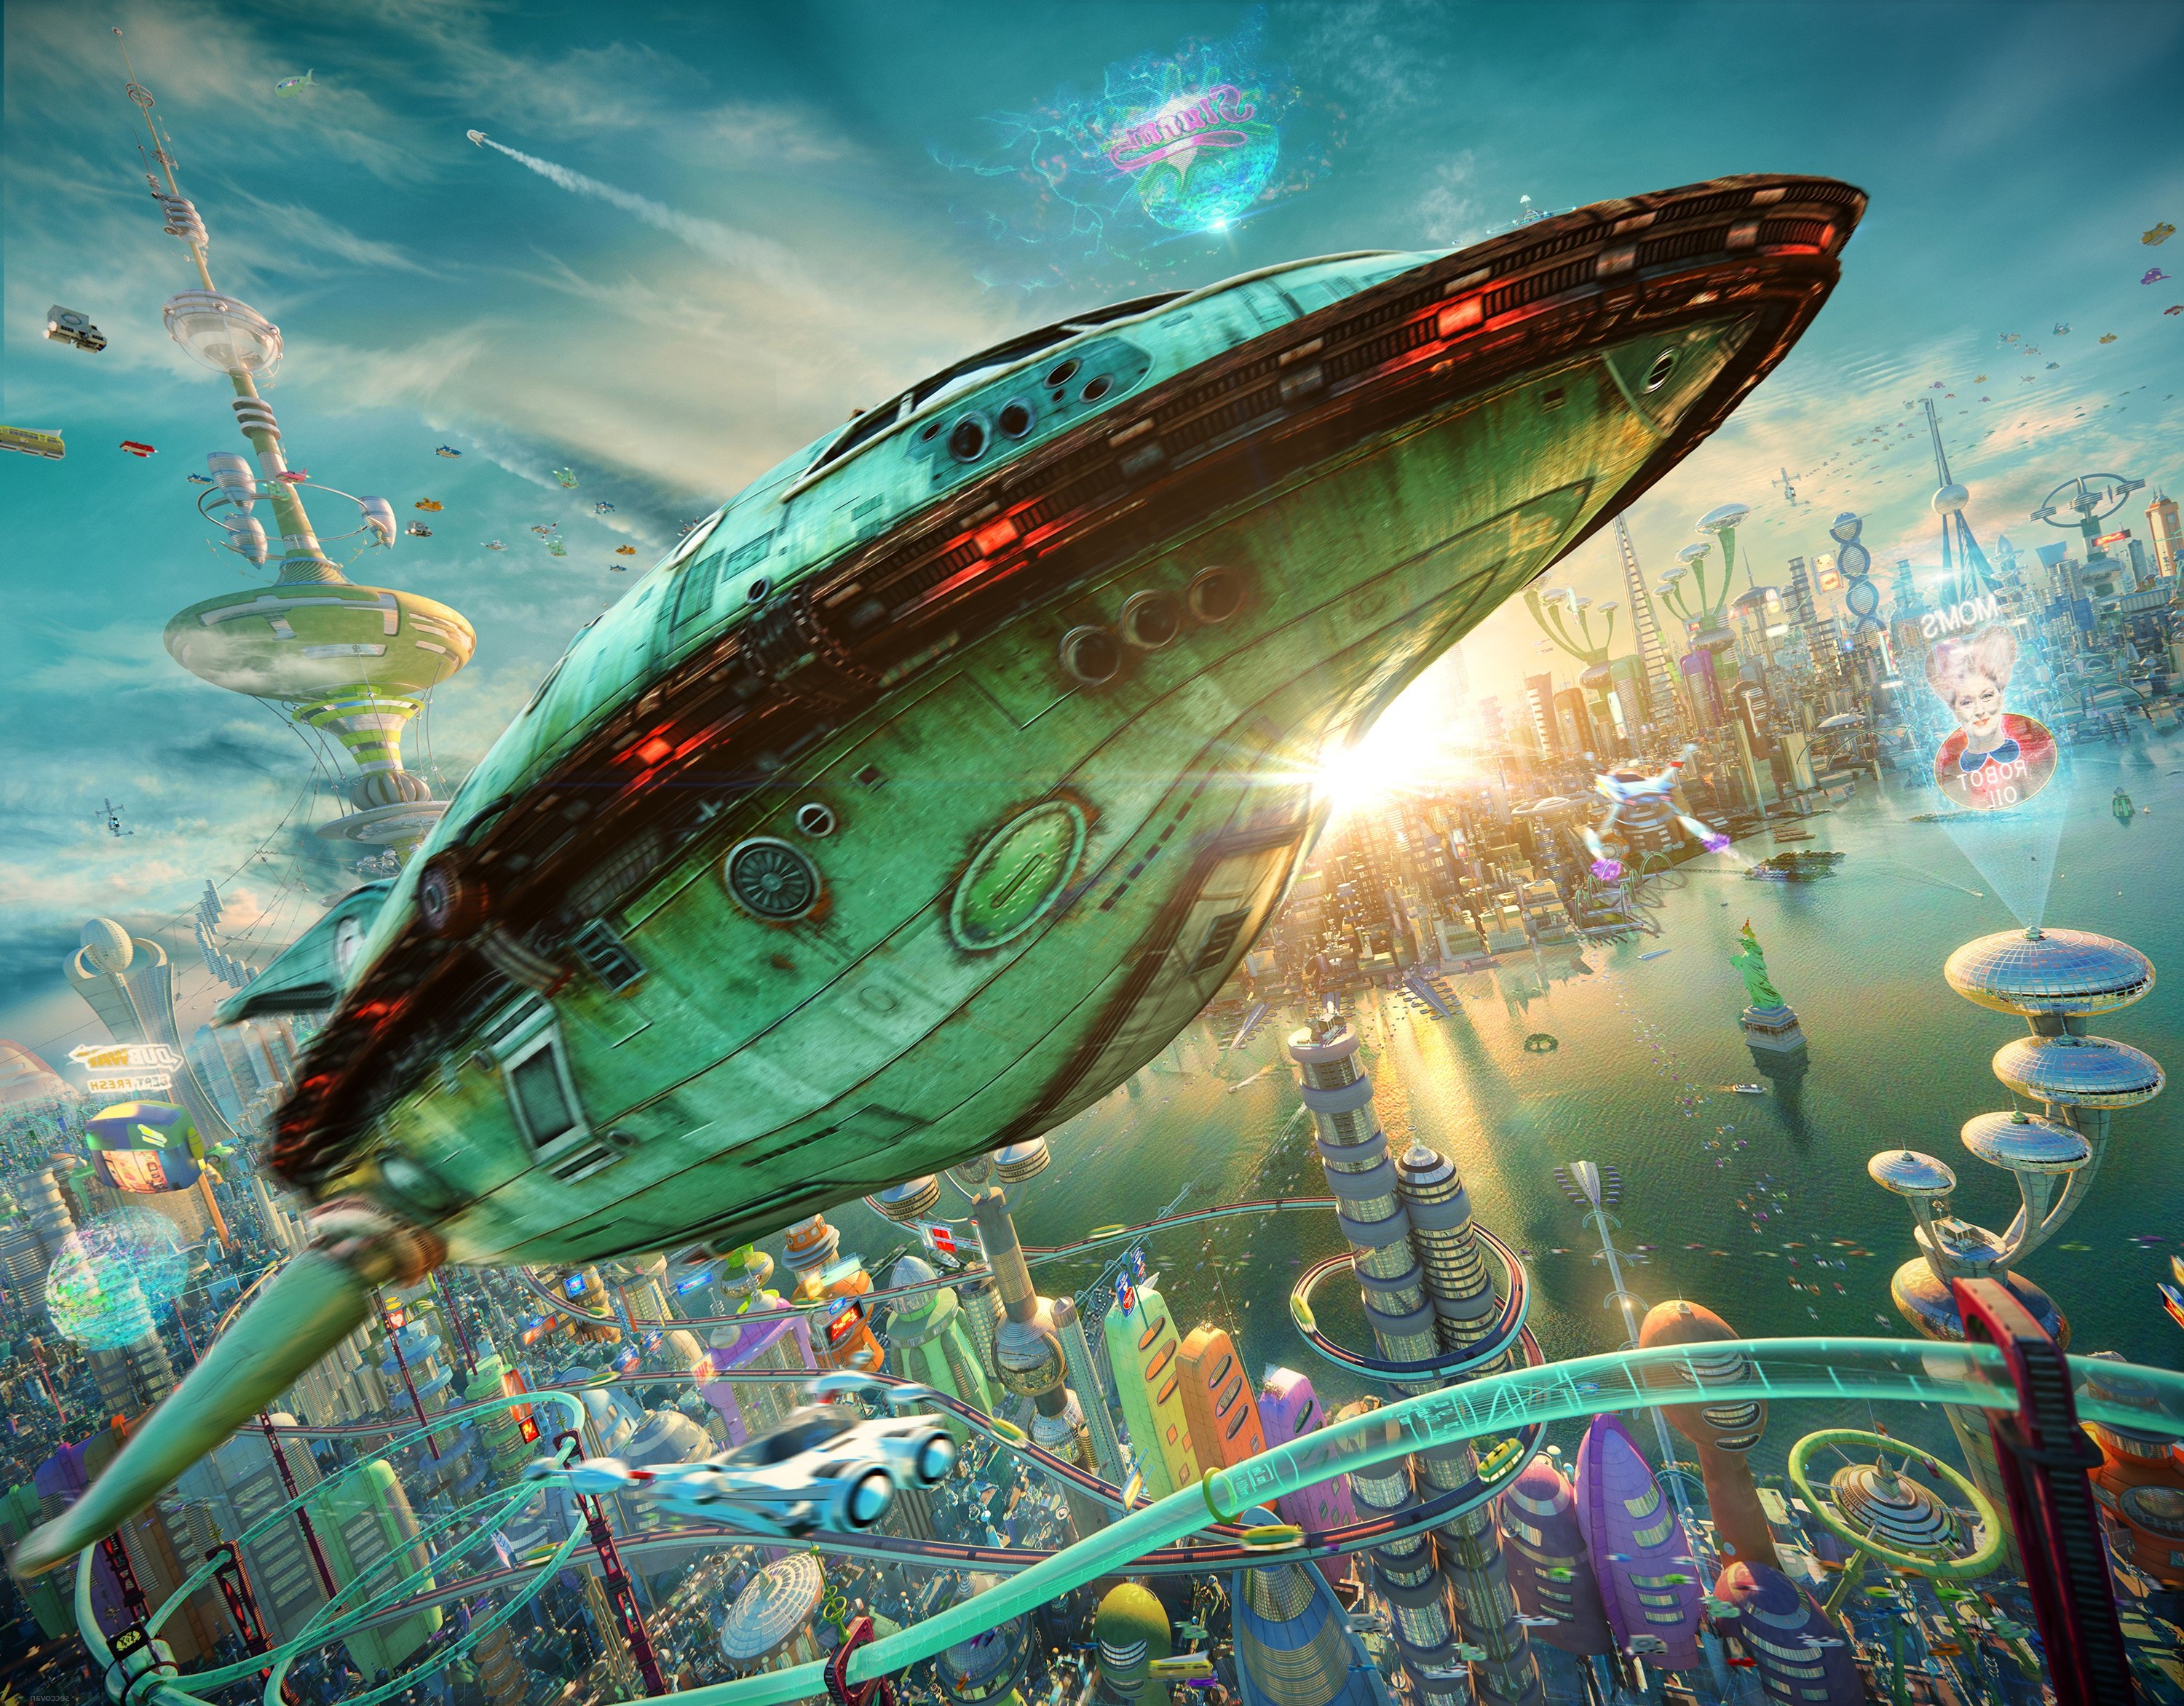 planet express wallpaper,illustration,airship,vehicle,space,games